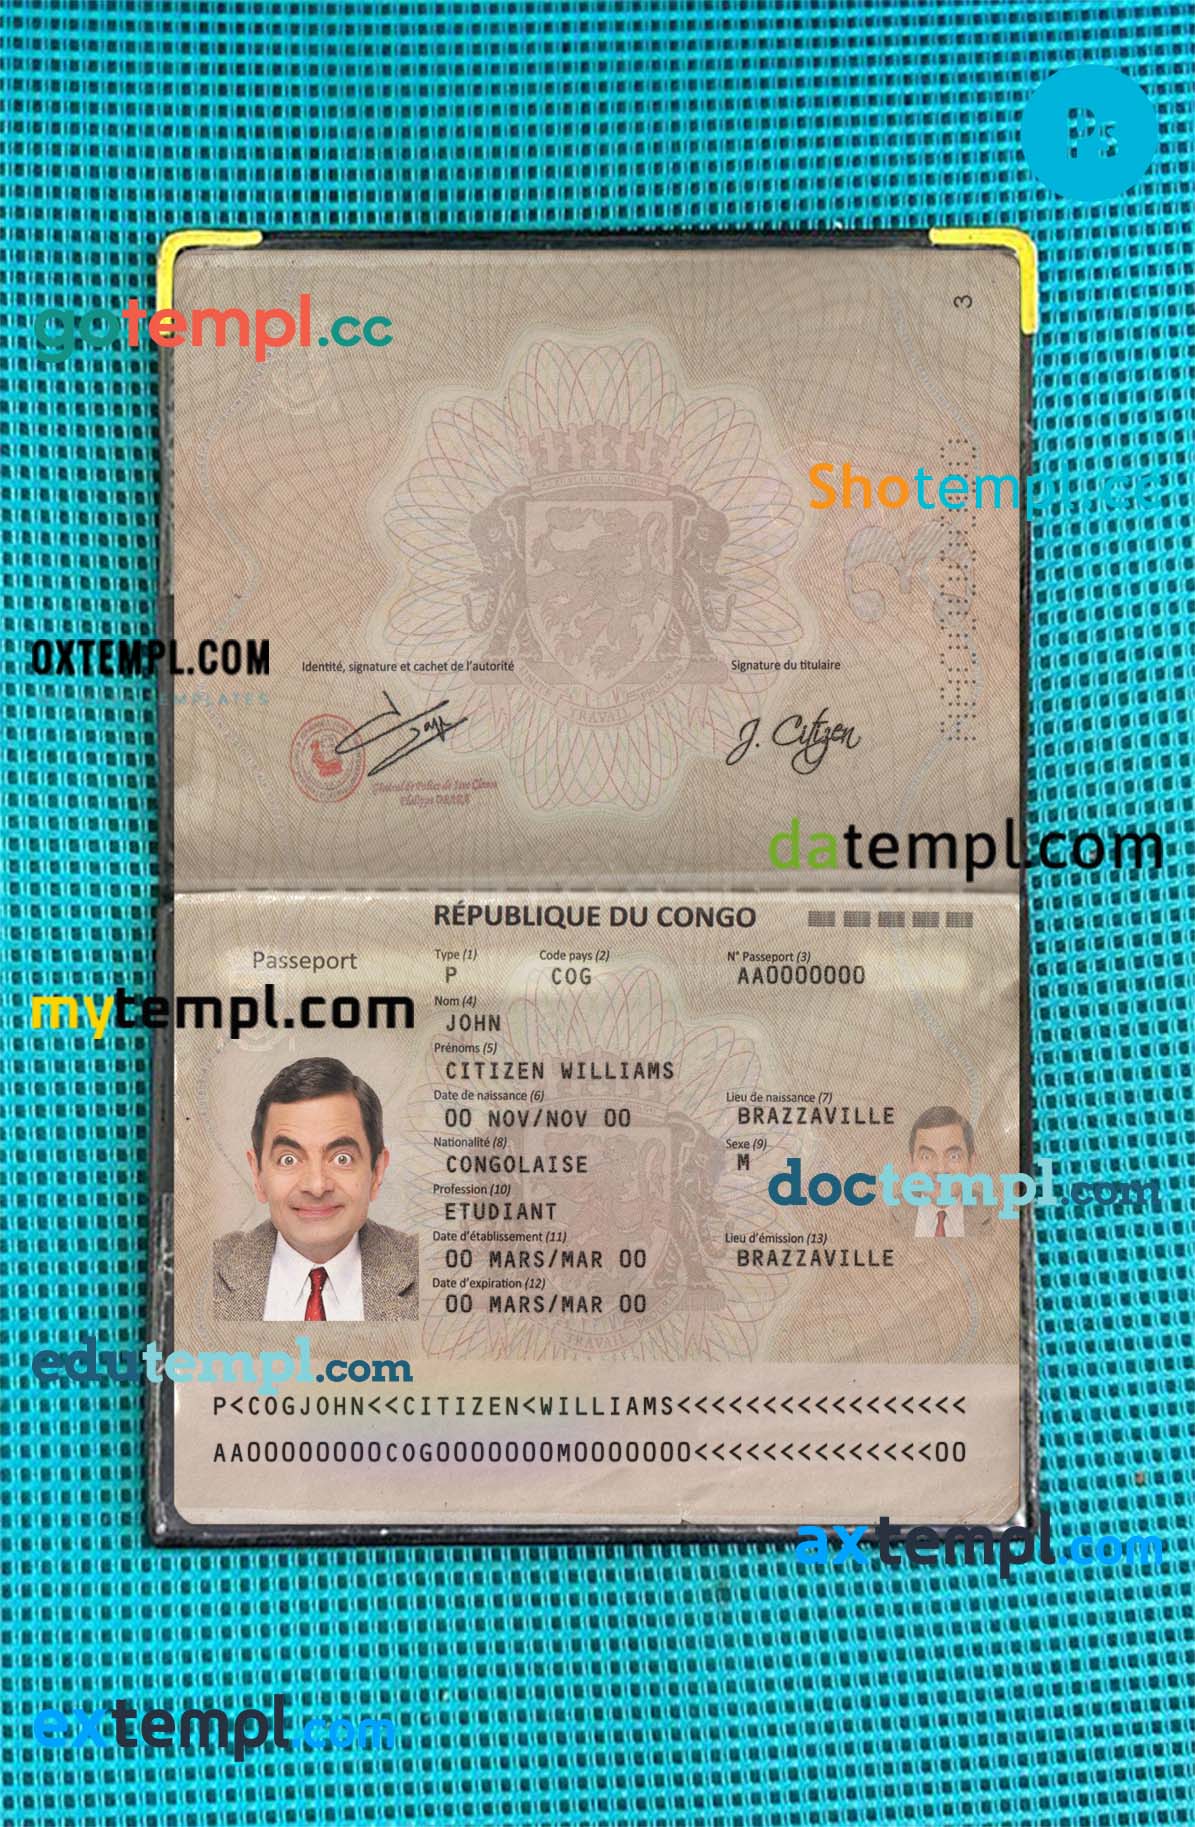 Sudan El Nilein Bank visa card fully editable template in PSD format